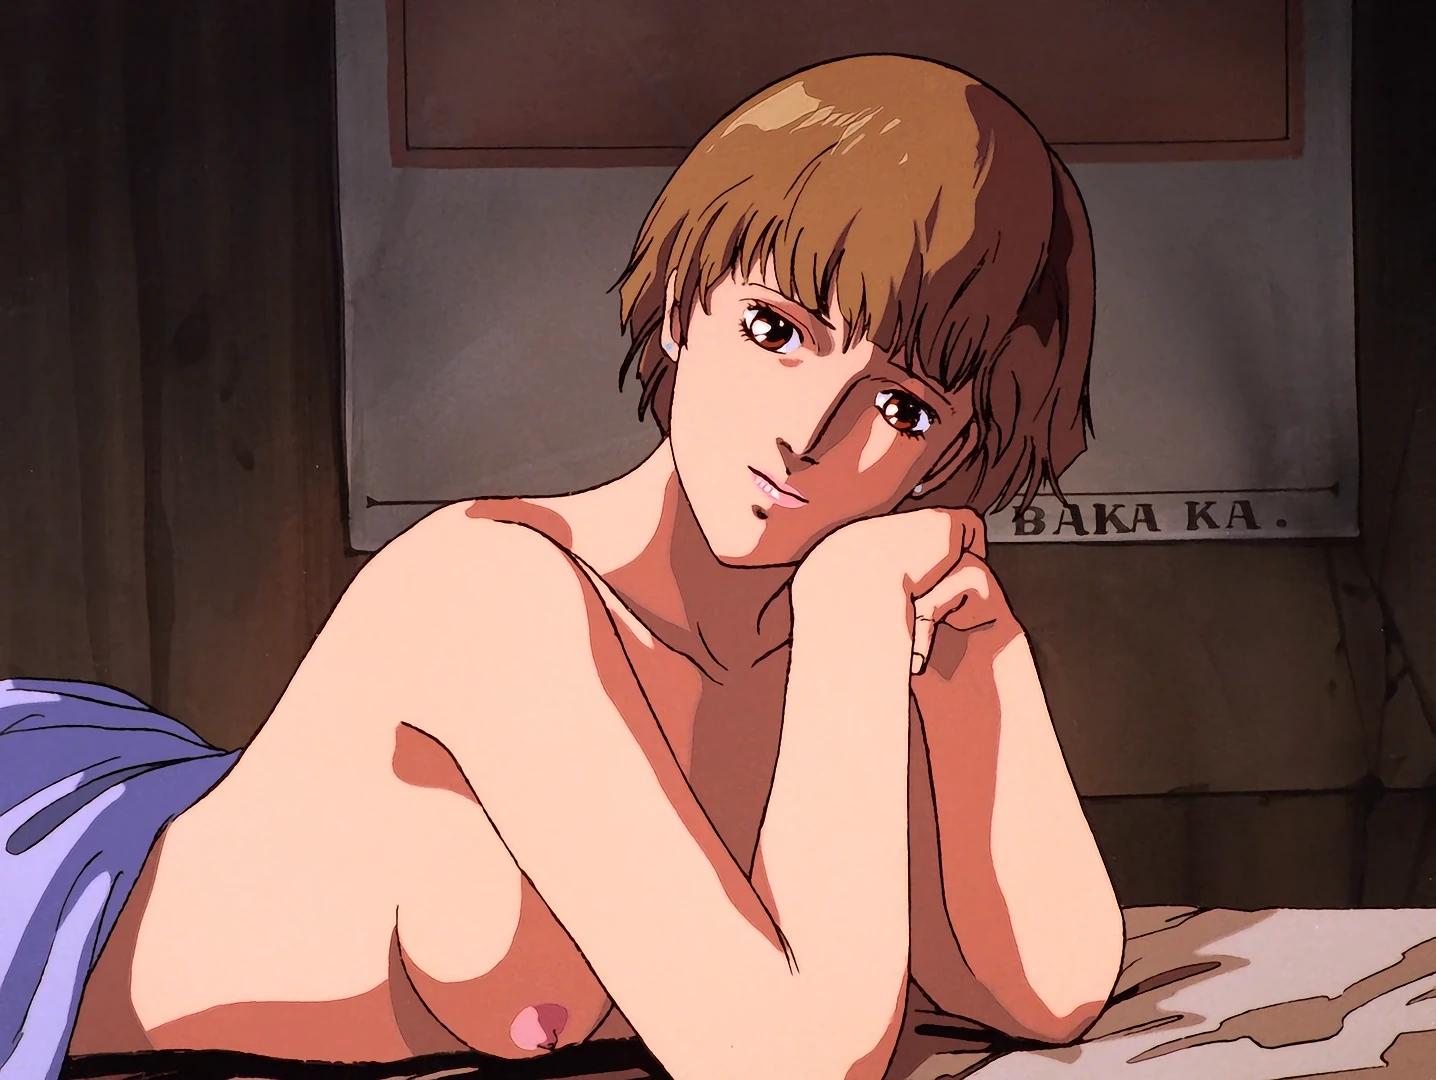  Megazone Part 2: Please give your secret - Takanaka Yui nude fanservice